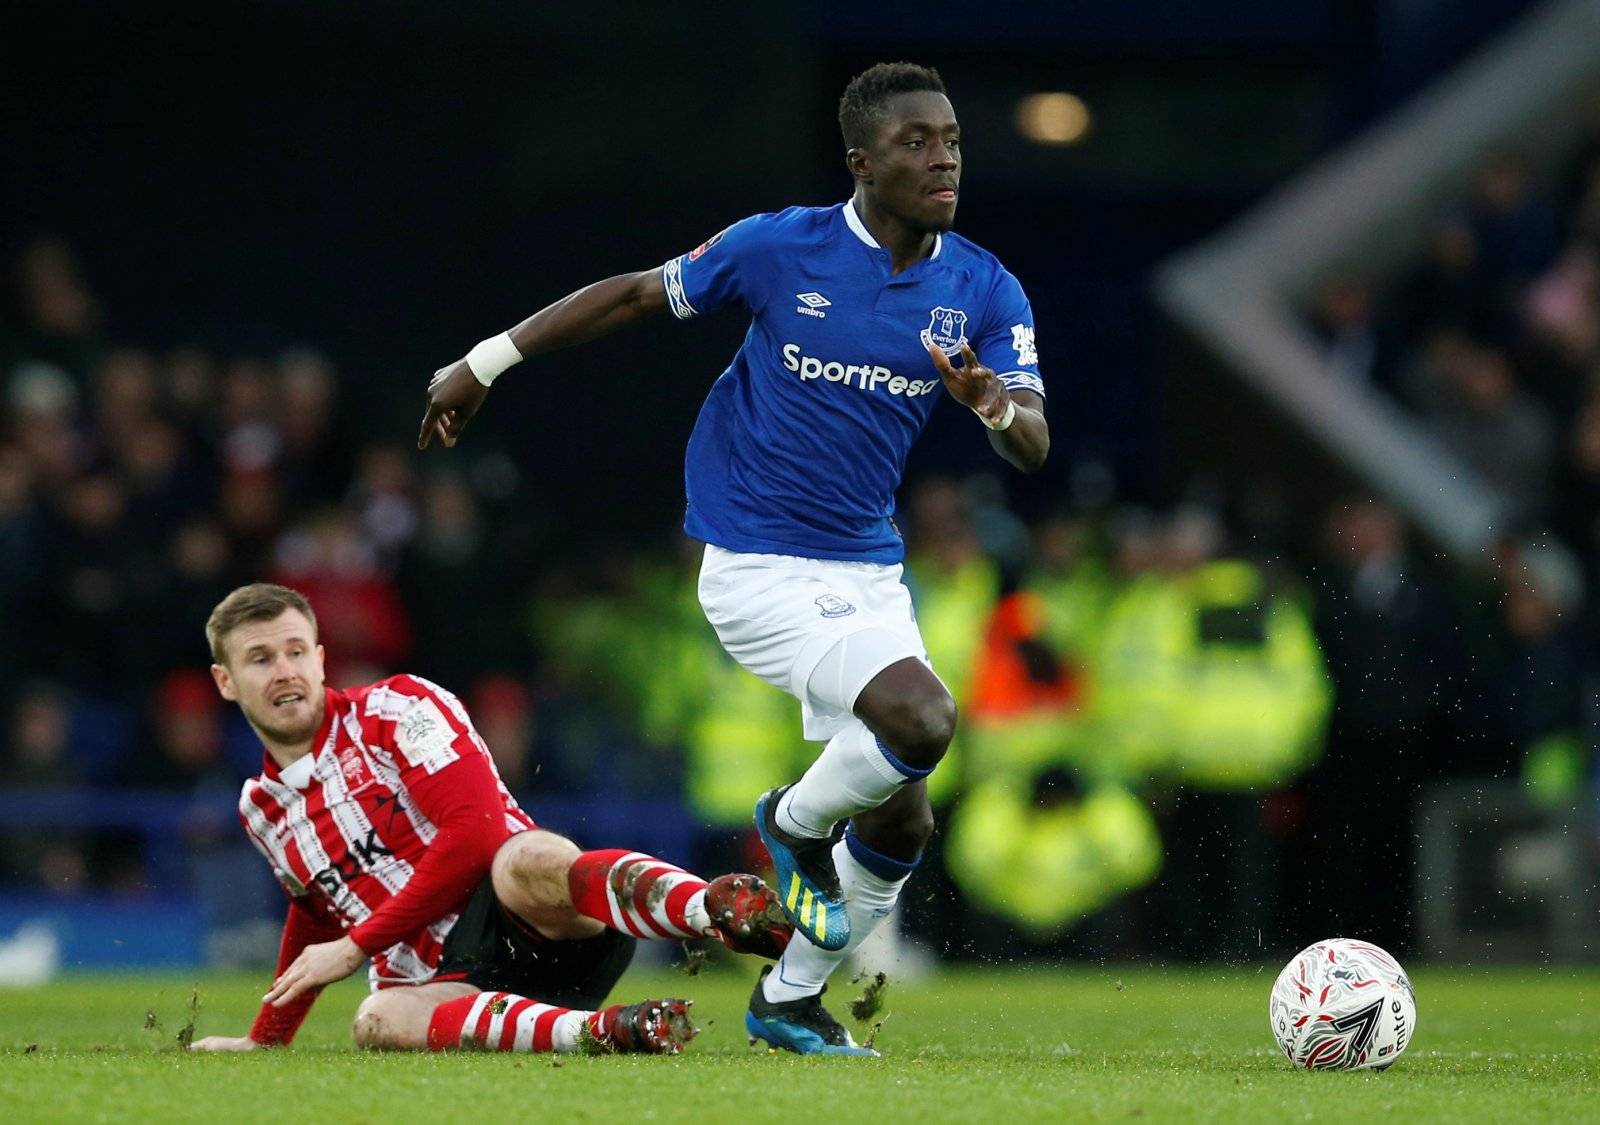 Everton: Idrissa Gueye sold to PSG - Everton